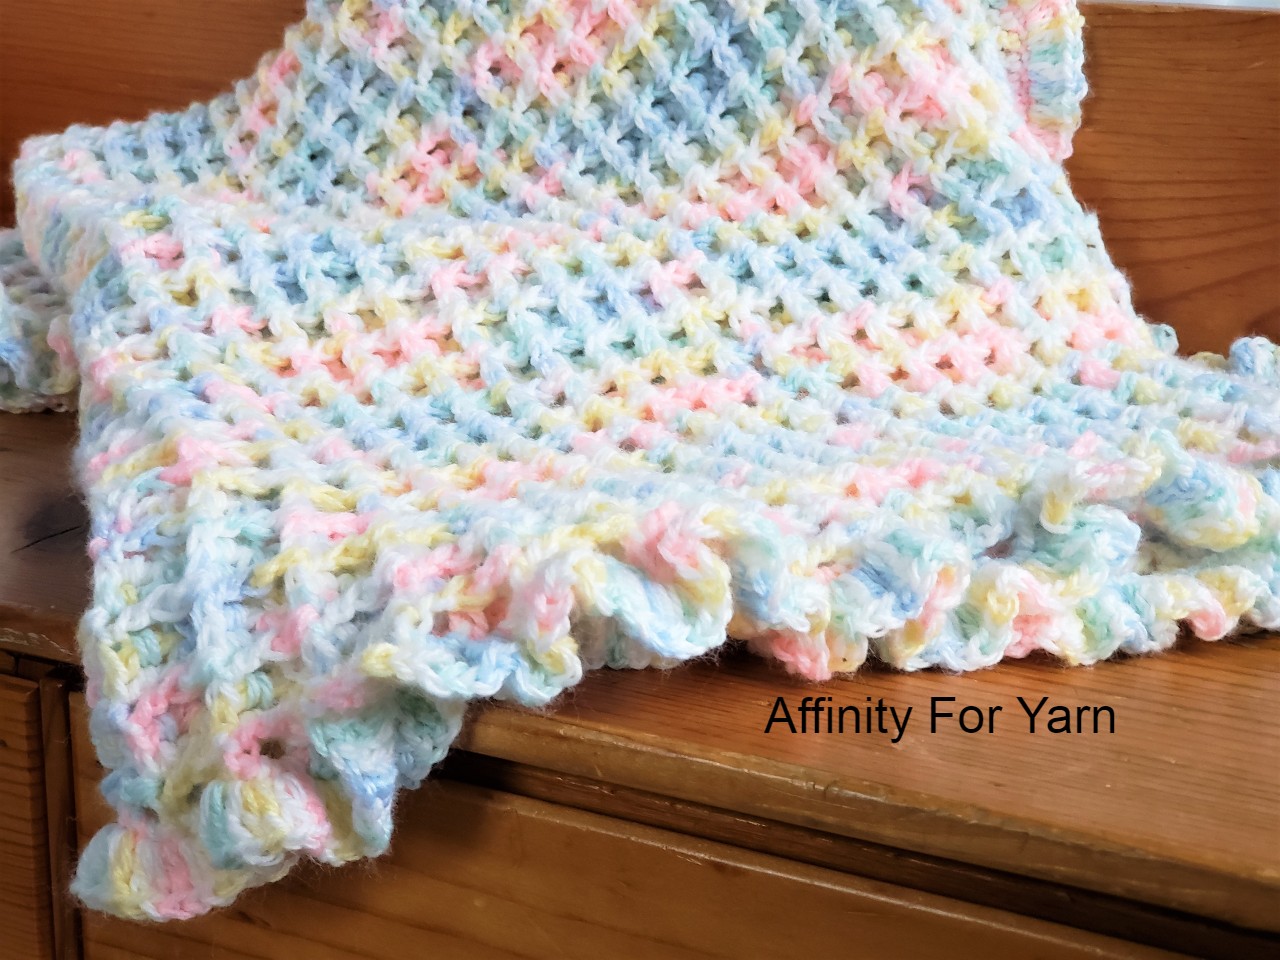 Only the Best for Baby: 3 Free Crochet Baby Blanket Patterns - I Like  Crochet